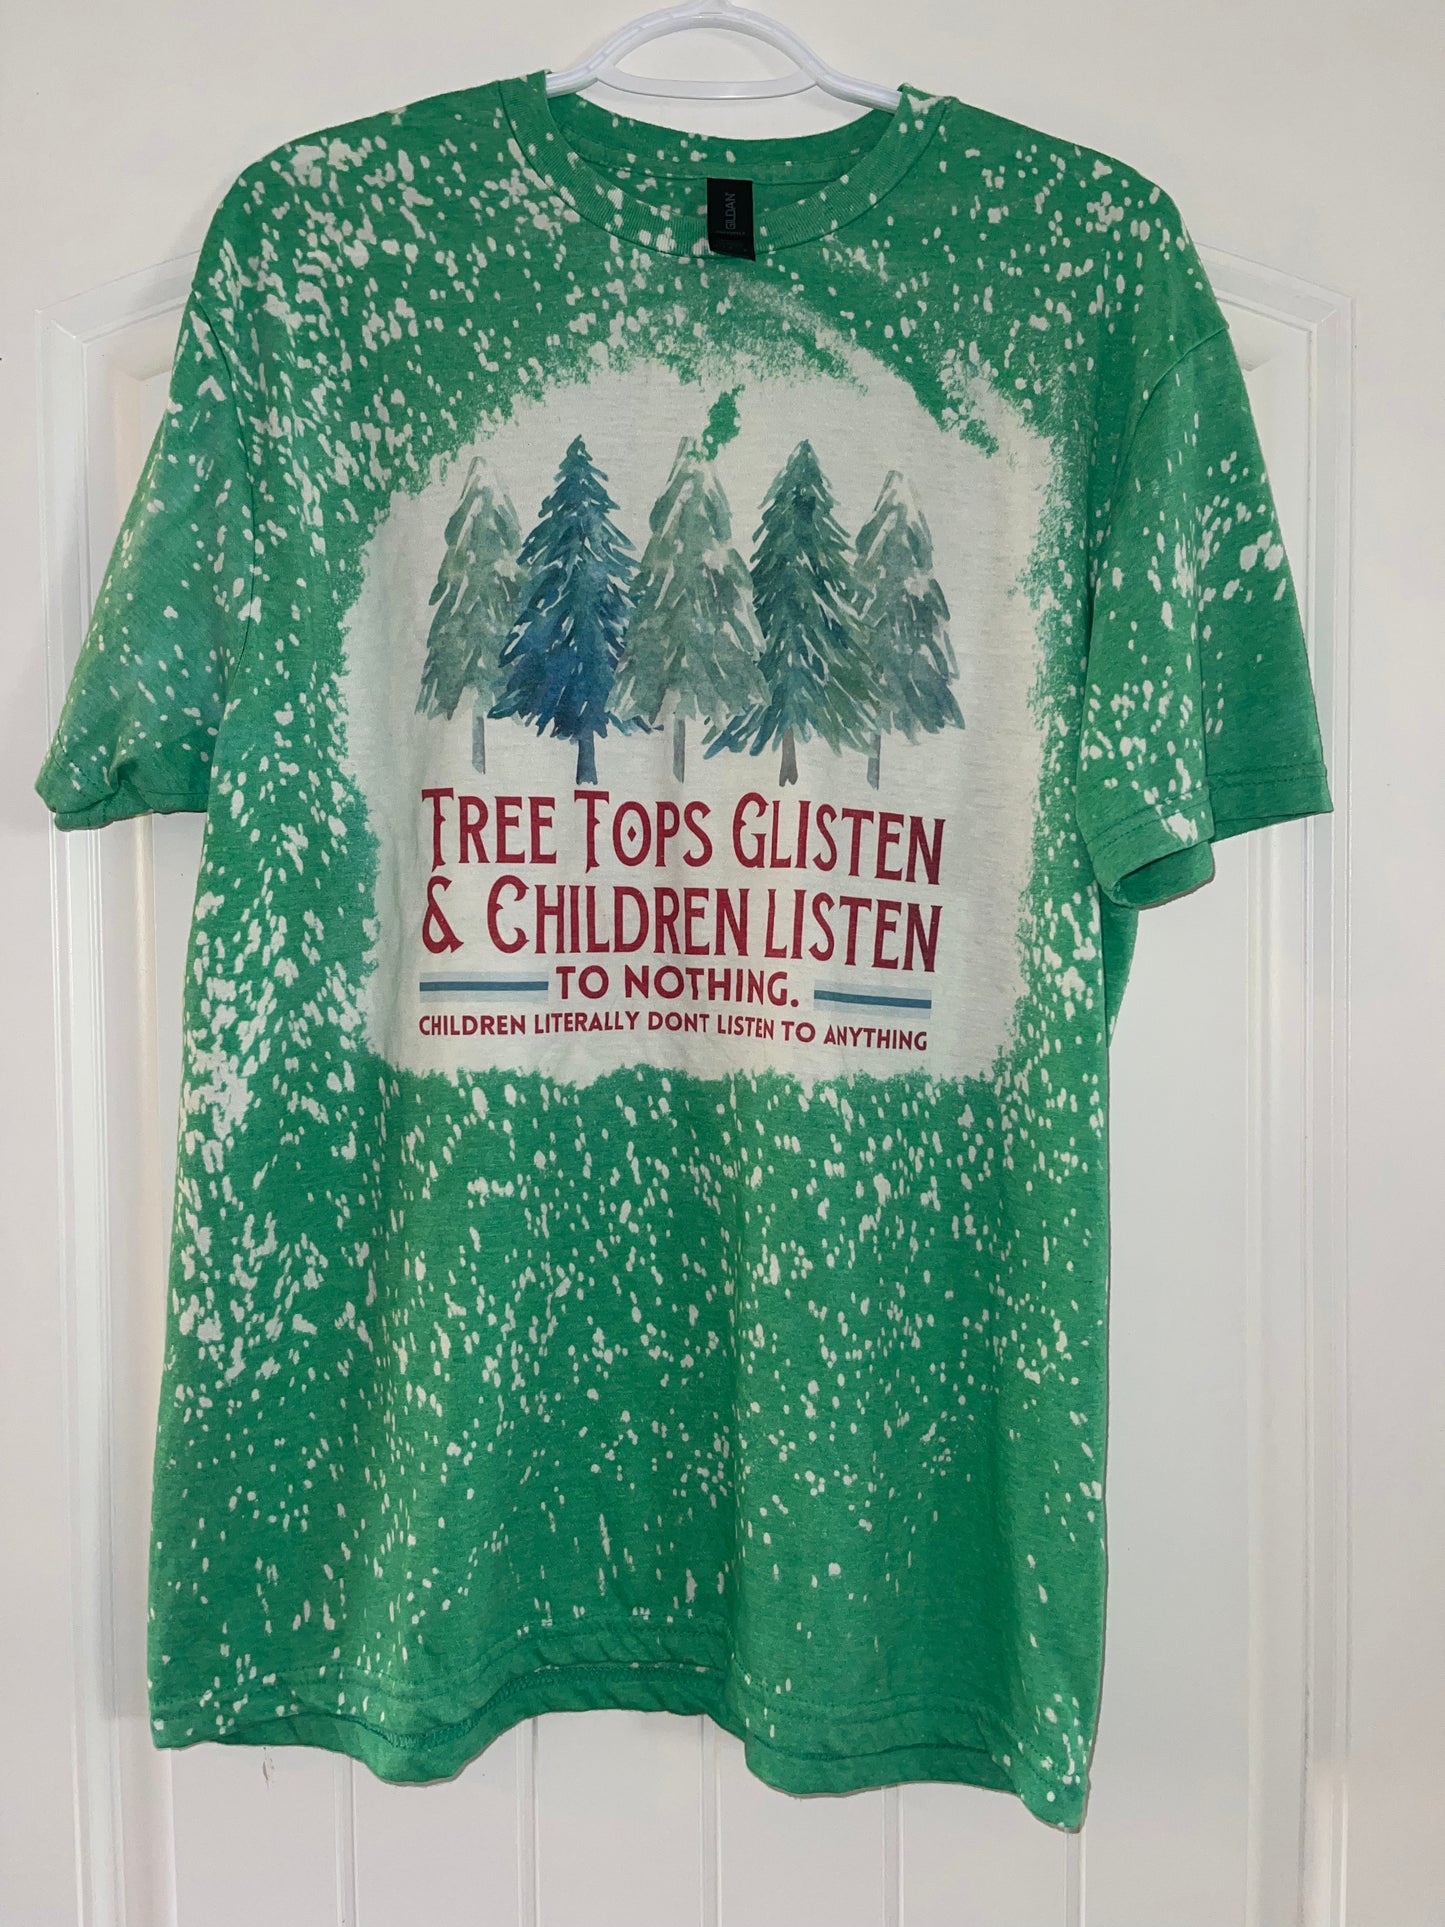 Tree tops glisten and children listen to nothing tee